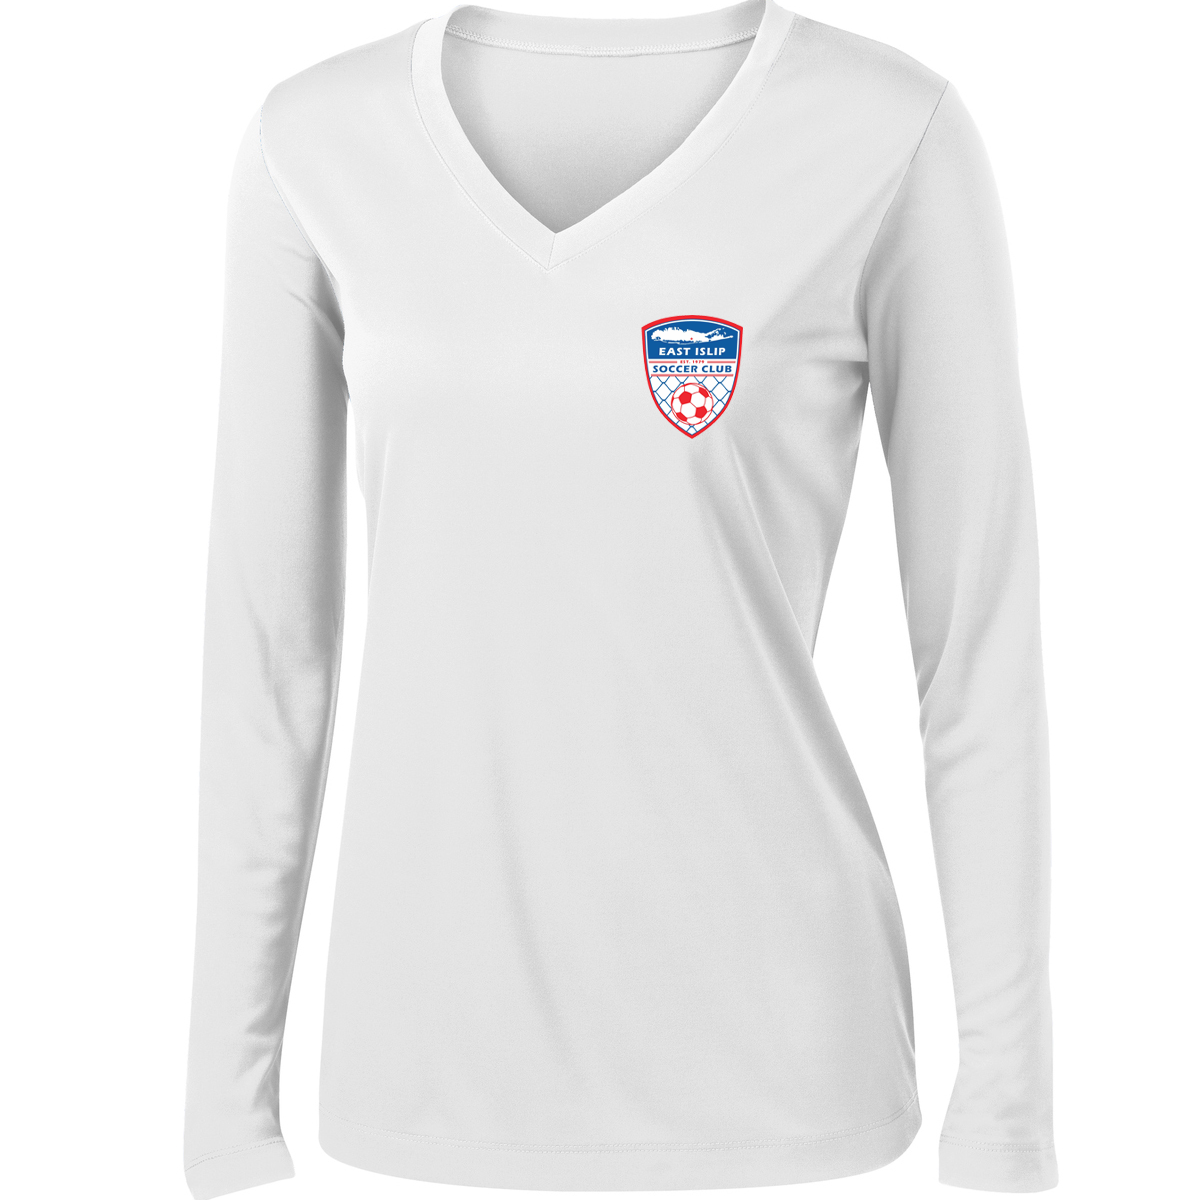 East Islip Soccer Club Women's Long Sleeve Performance Shirt